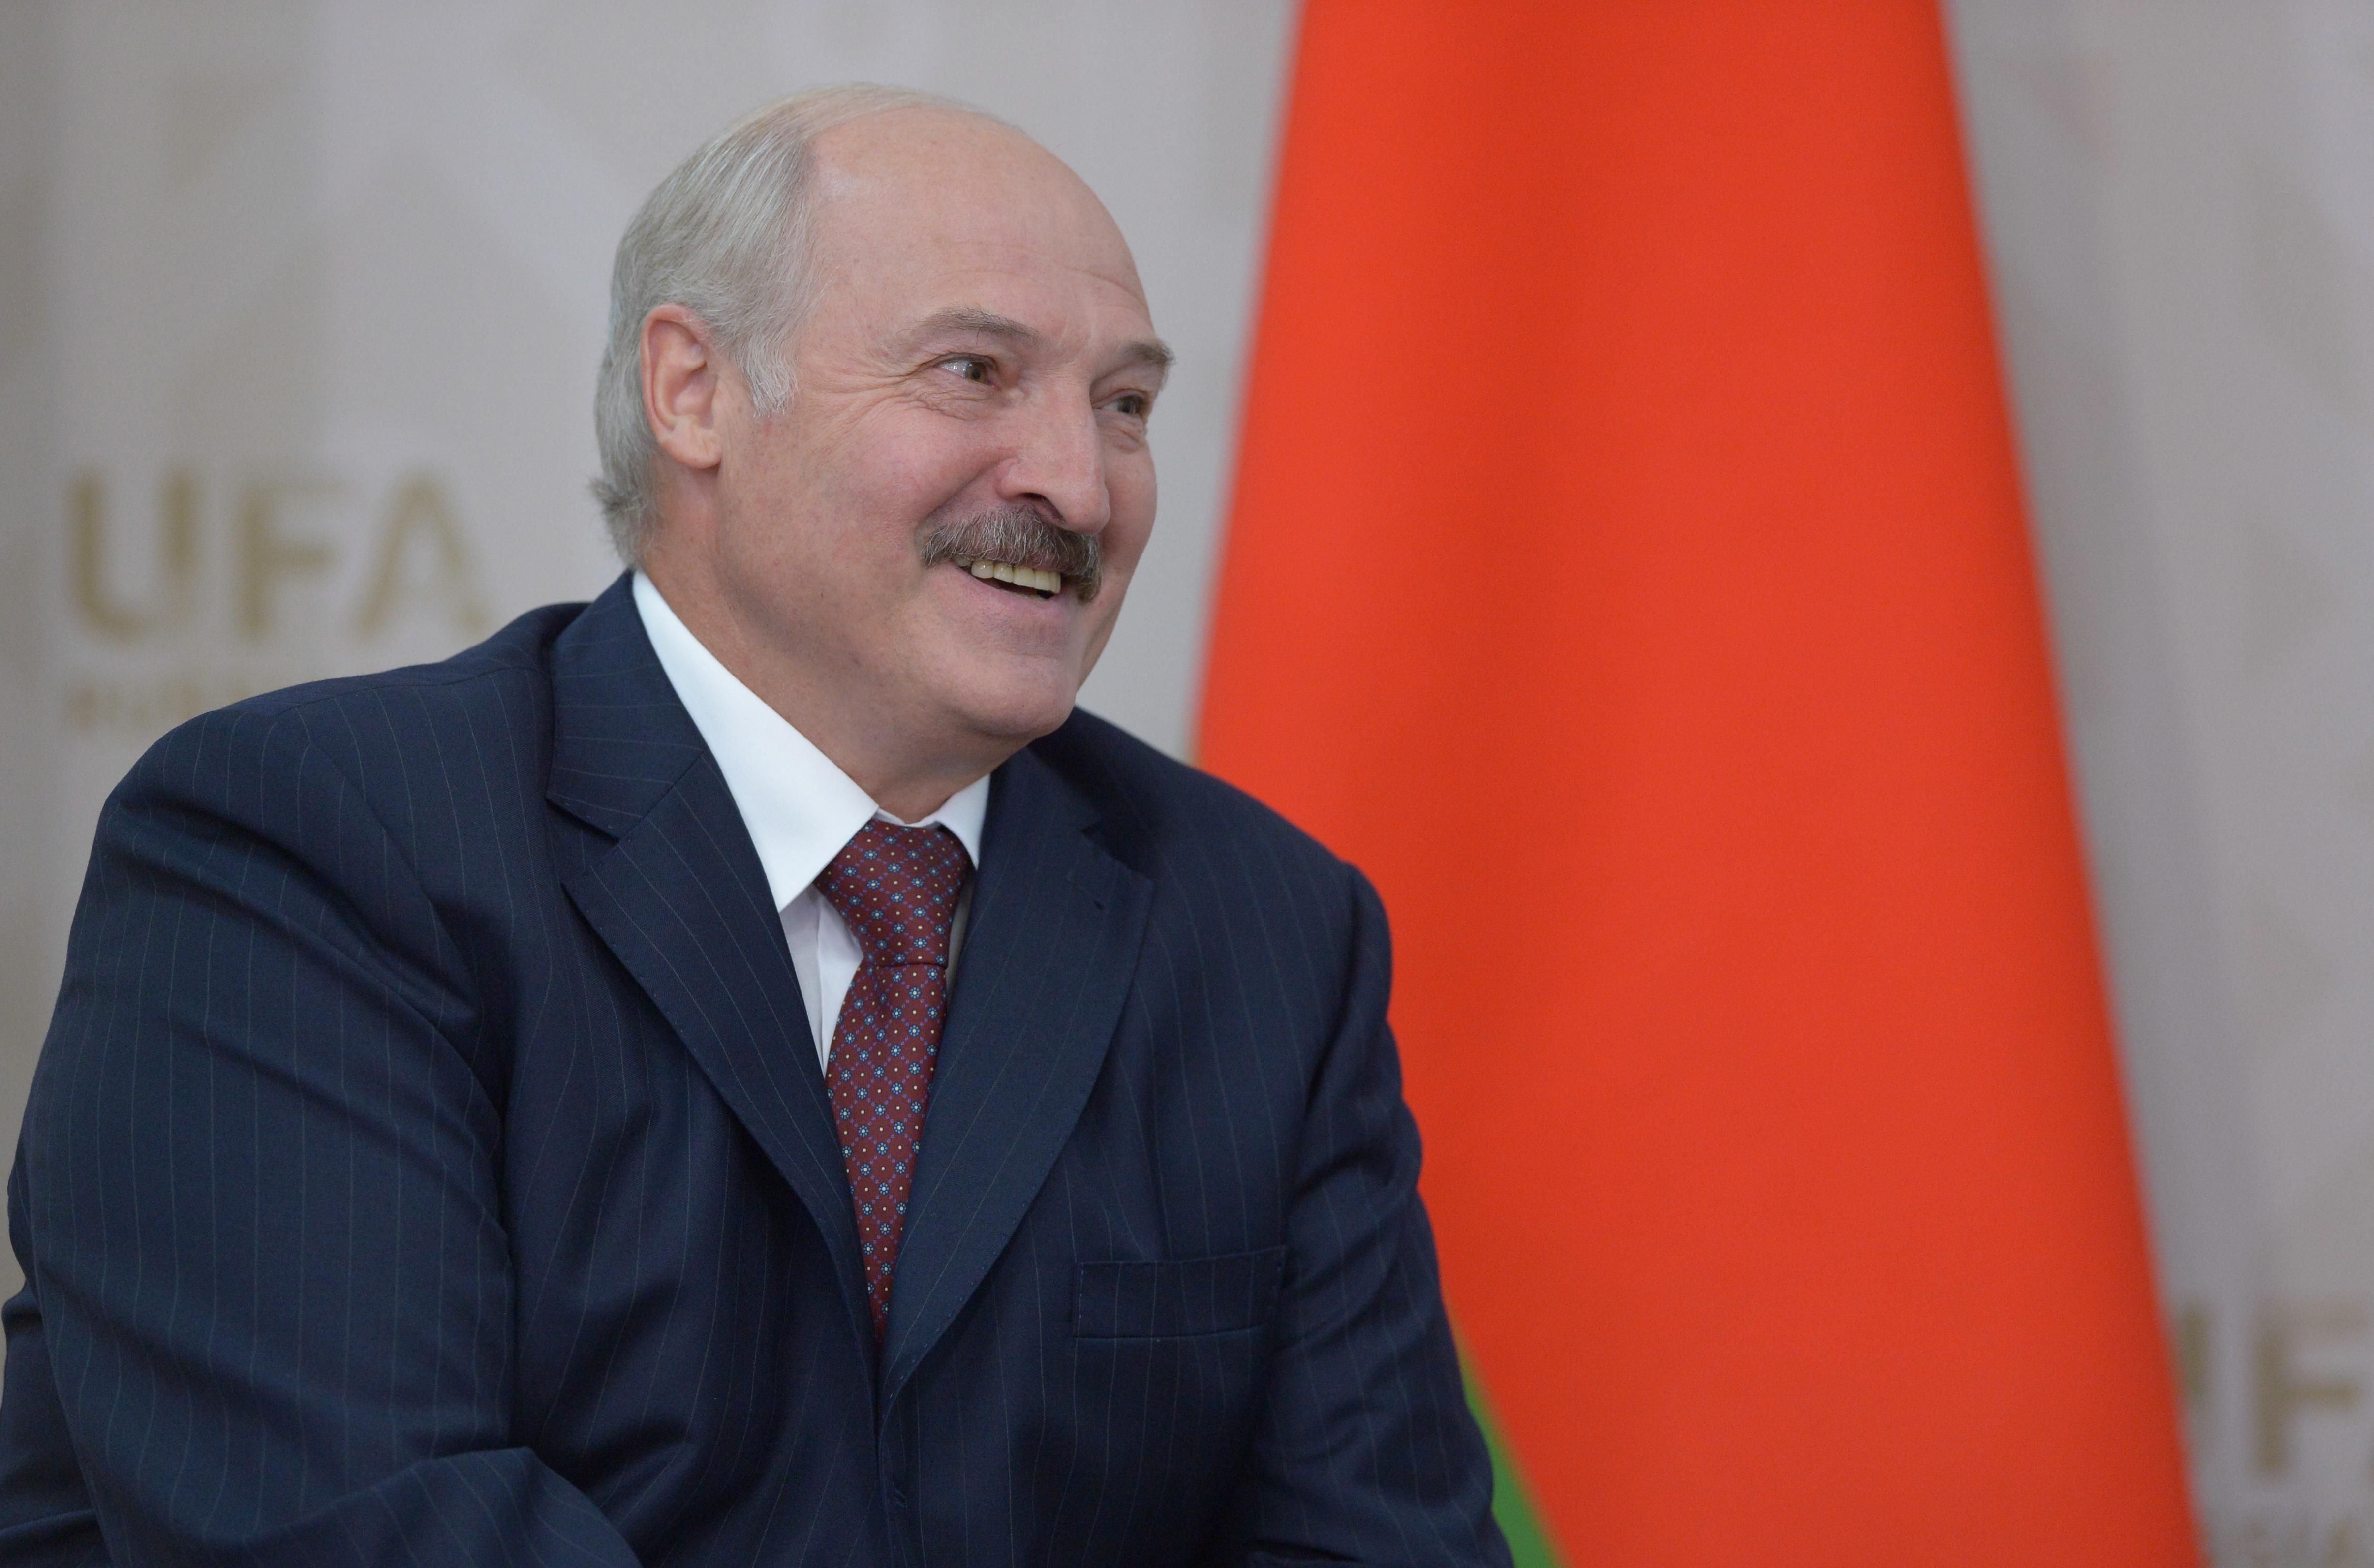 Инаугурация Лукашенко 2020: видео церемонии 23 сентября 2020